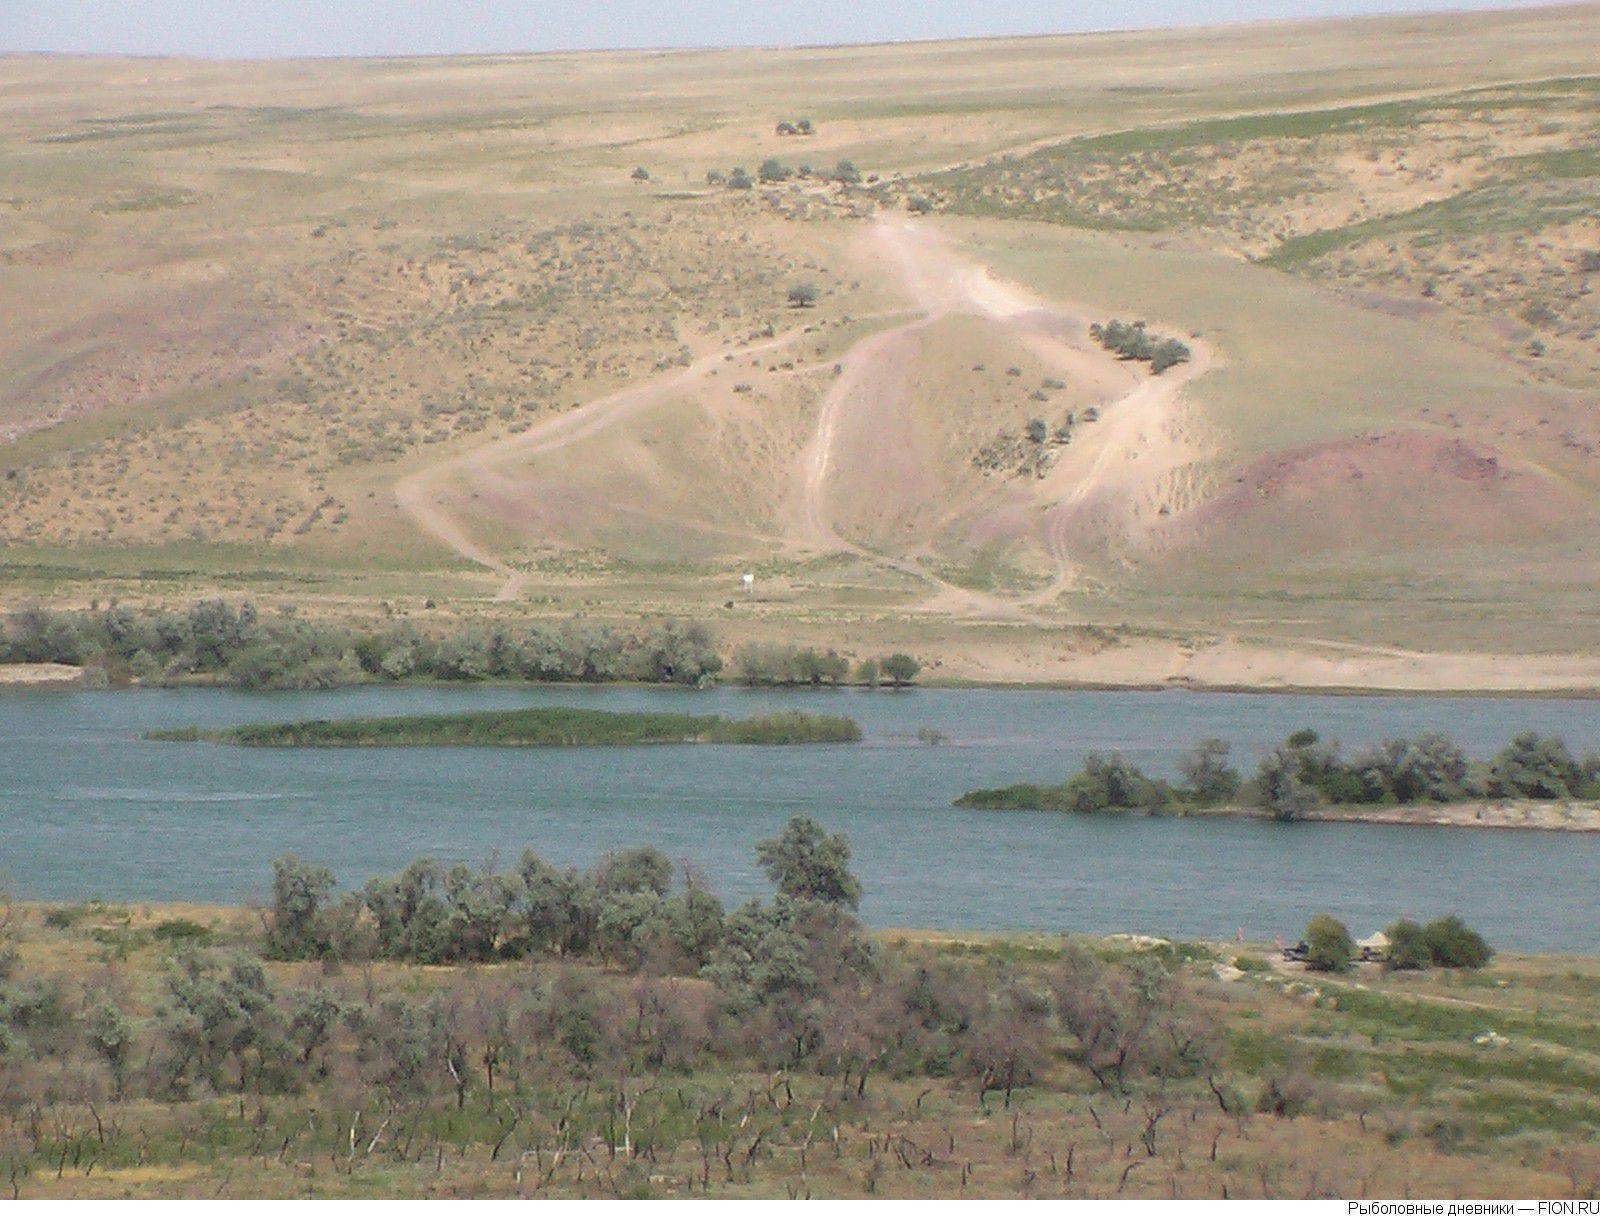 Реки казахстана — википедия. что такое реки казахстана